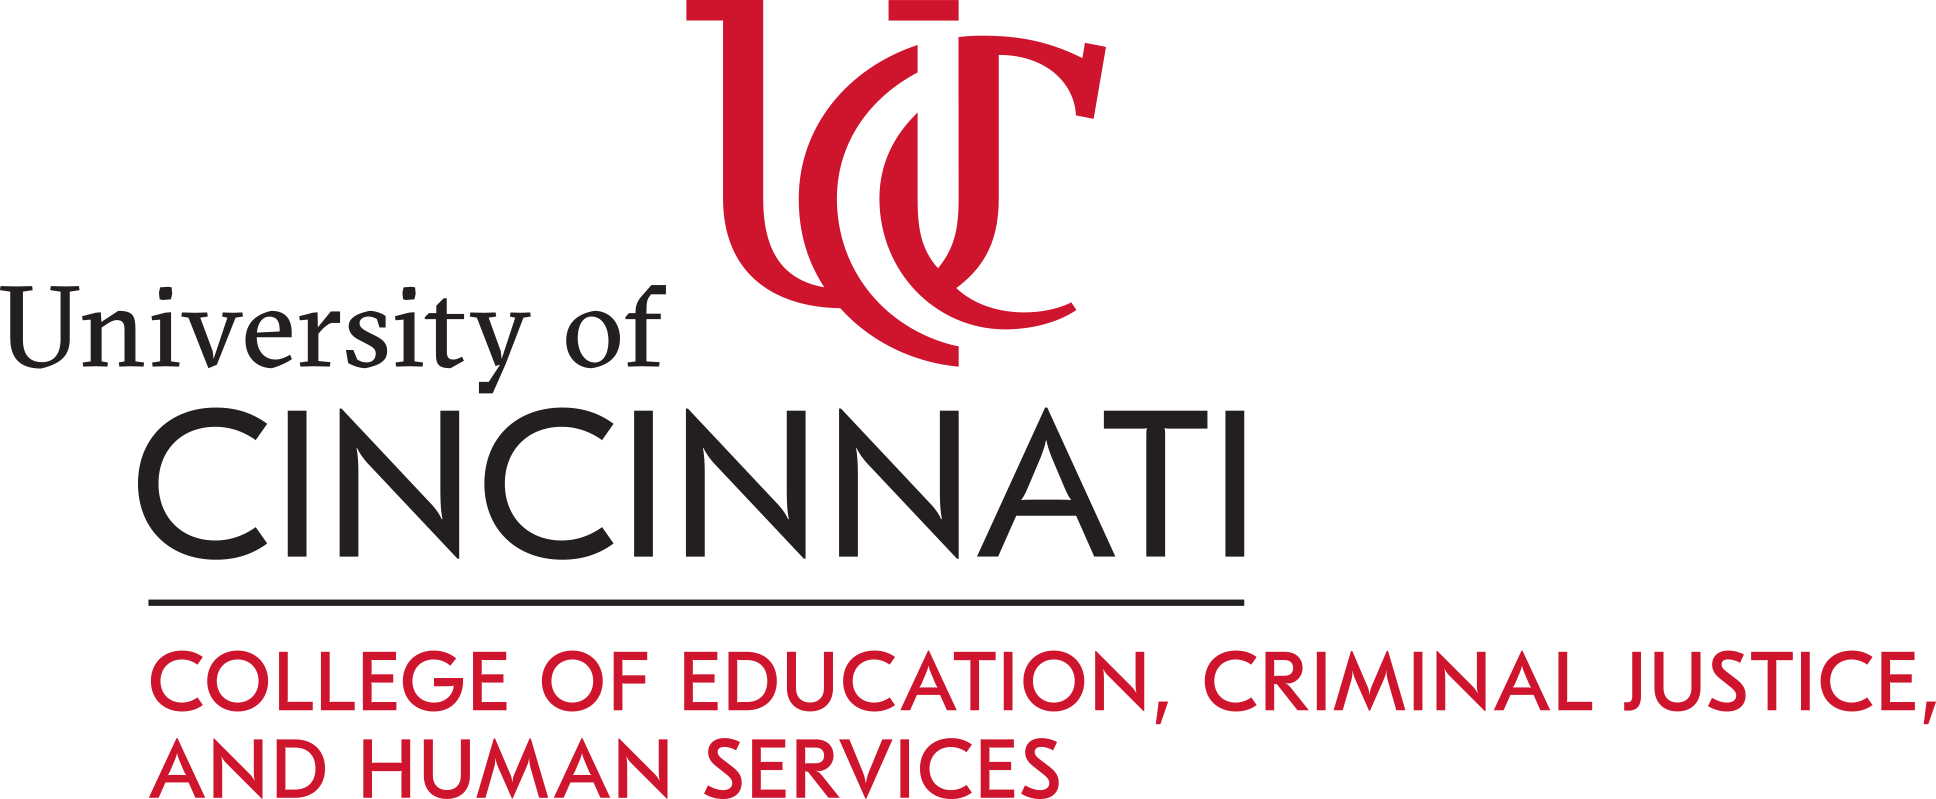 Room Sponsor: University of Cincinnati, College of Education, Criminal Justice and Human Services